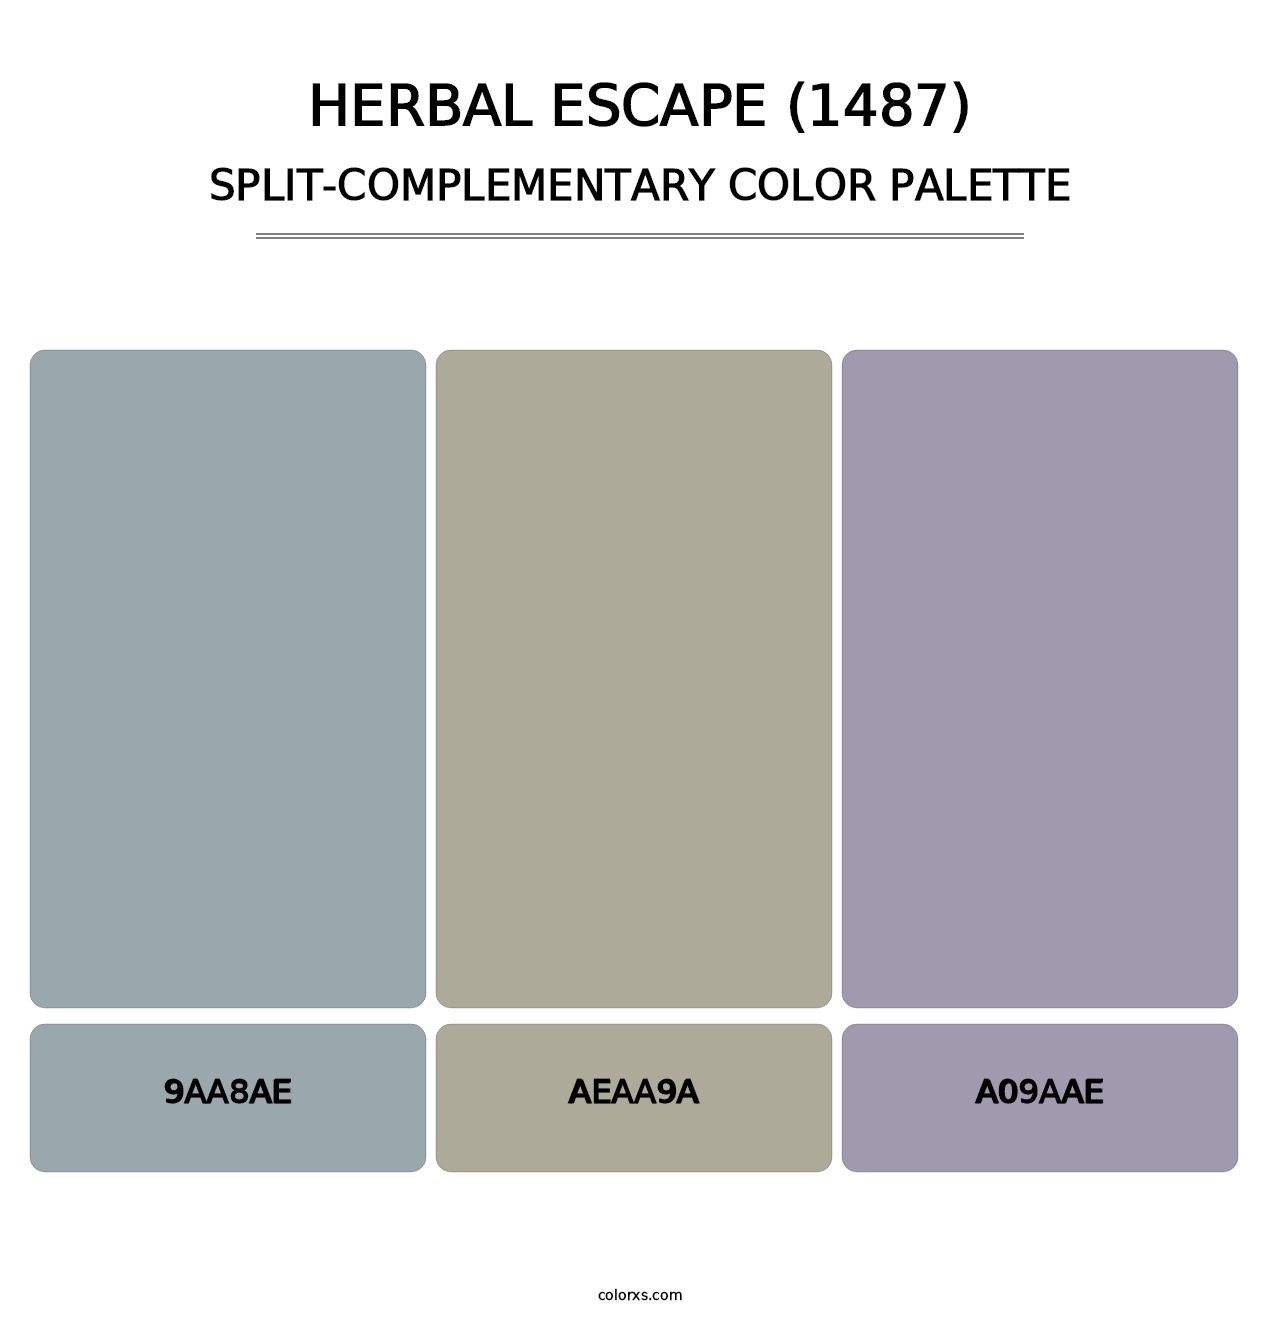 Herbal Escape (1487) - Split-Complementary Color Palette